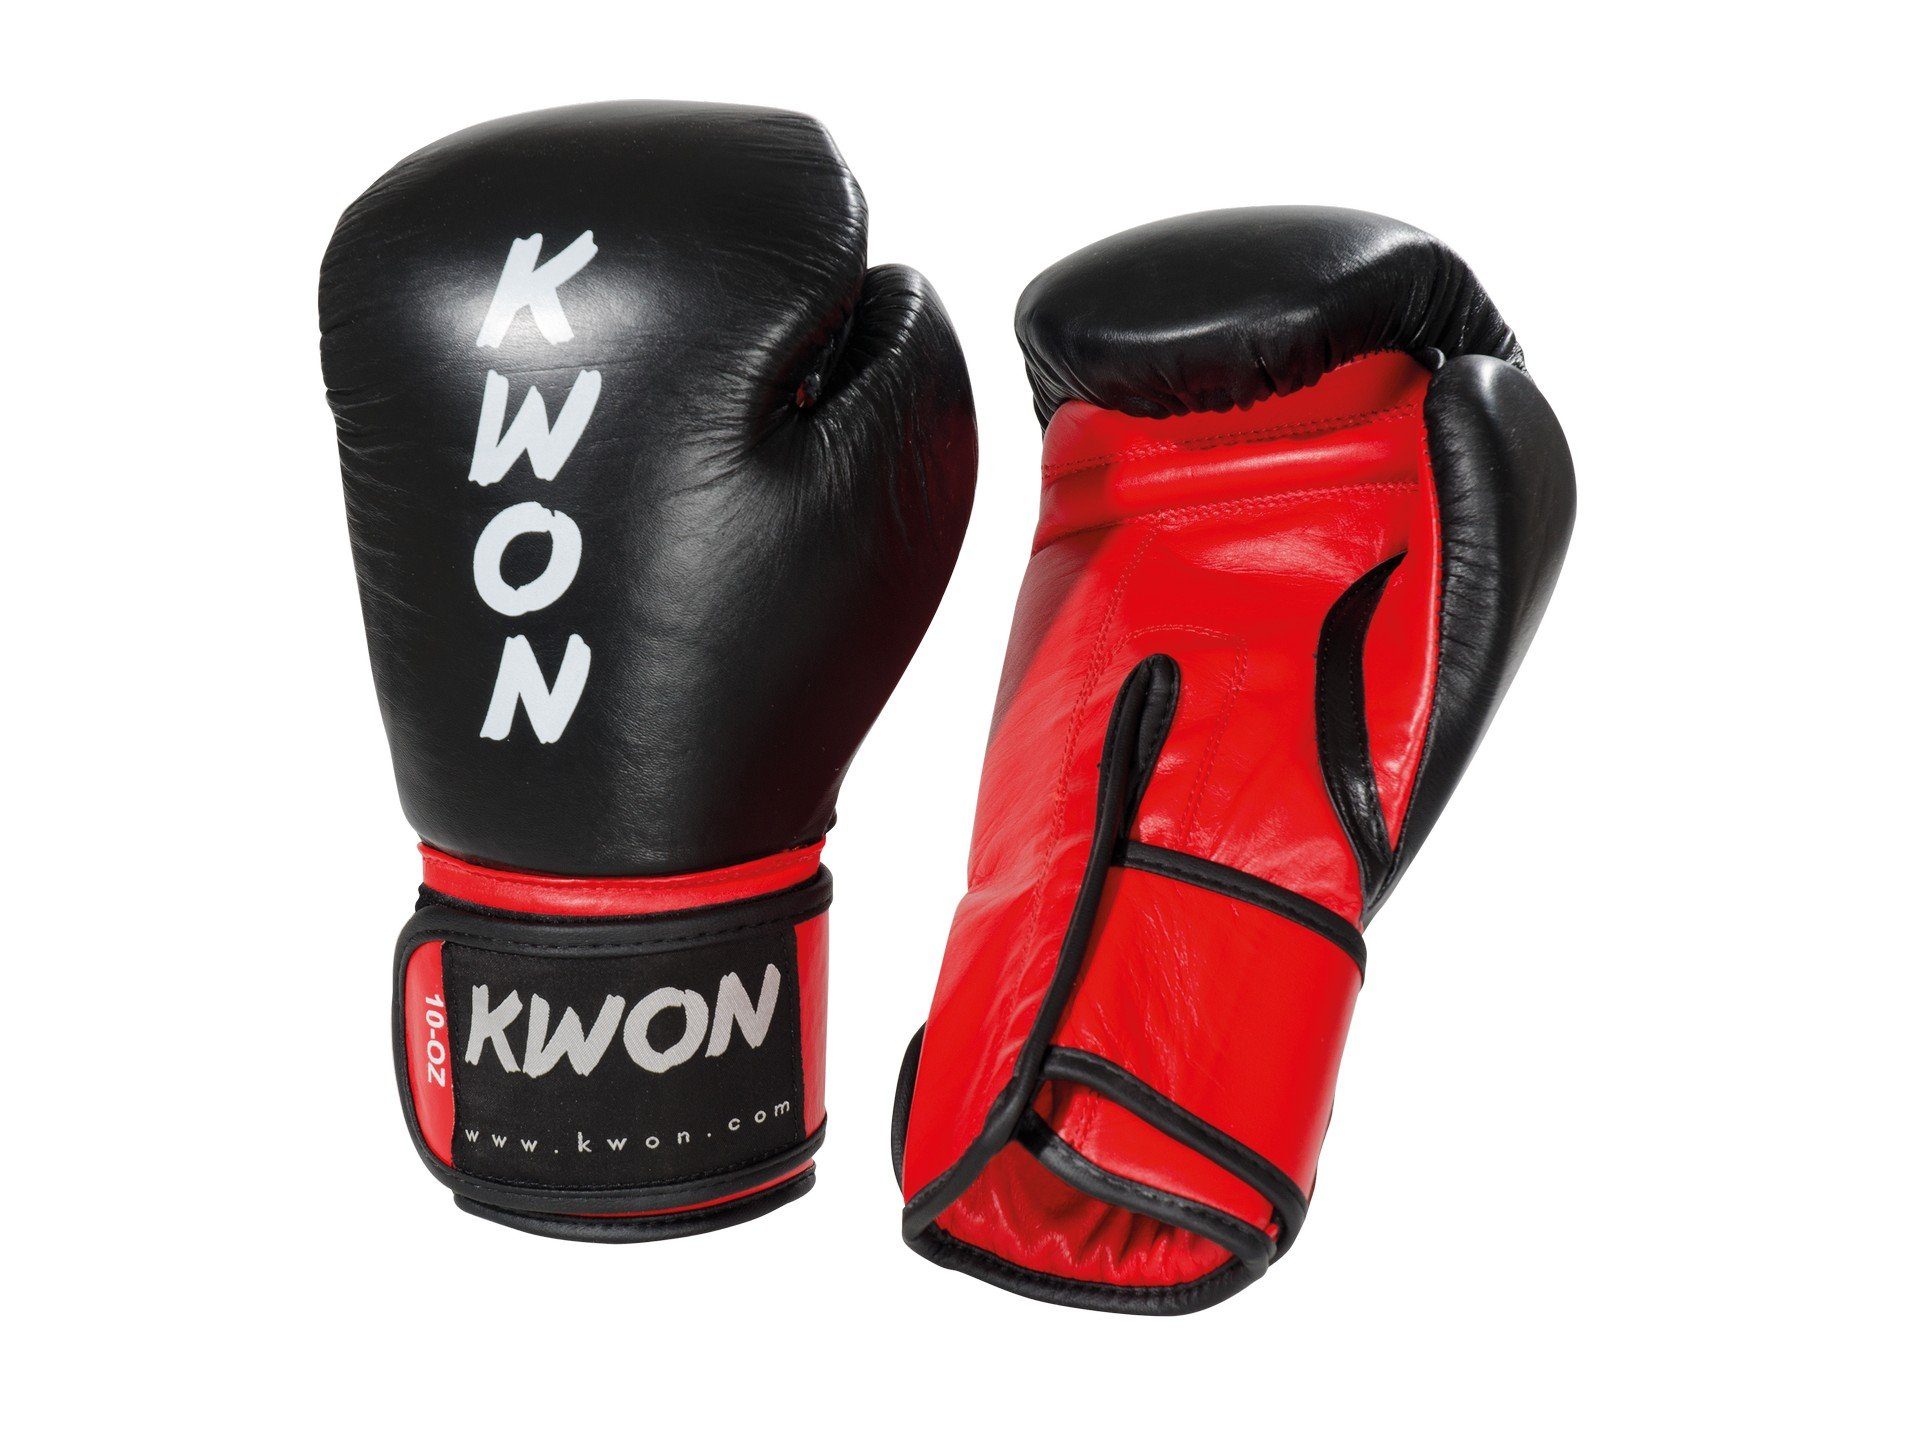 KO anerkannt Echtes WKU Boxen Leder Kickboxen Profi KWON (Vollkontakt, Box-Handschuhe Form, Ausführung, Champ schwarz/gelb Ergo Paar), Thaiboxen Profi Leder, Boxhandschuhe